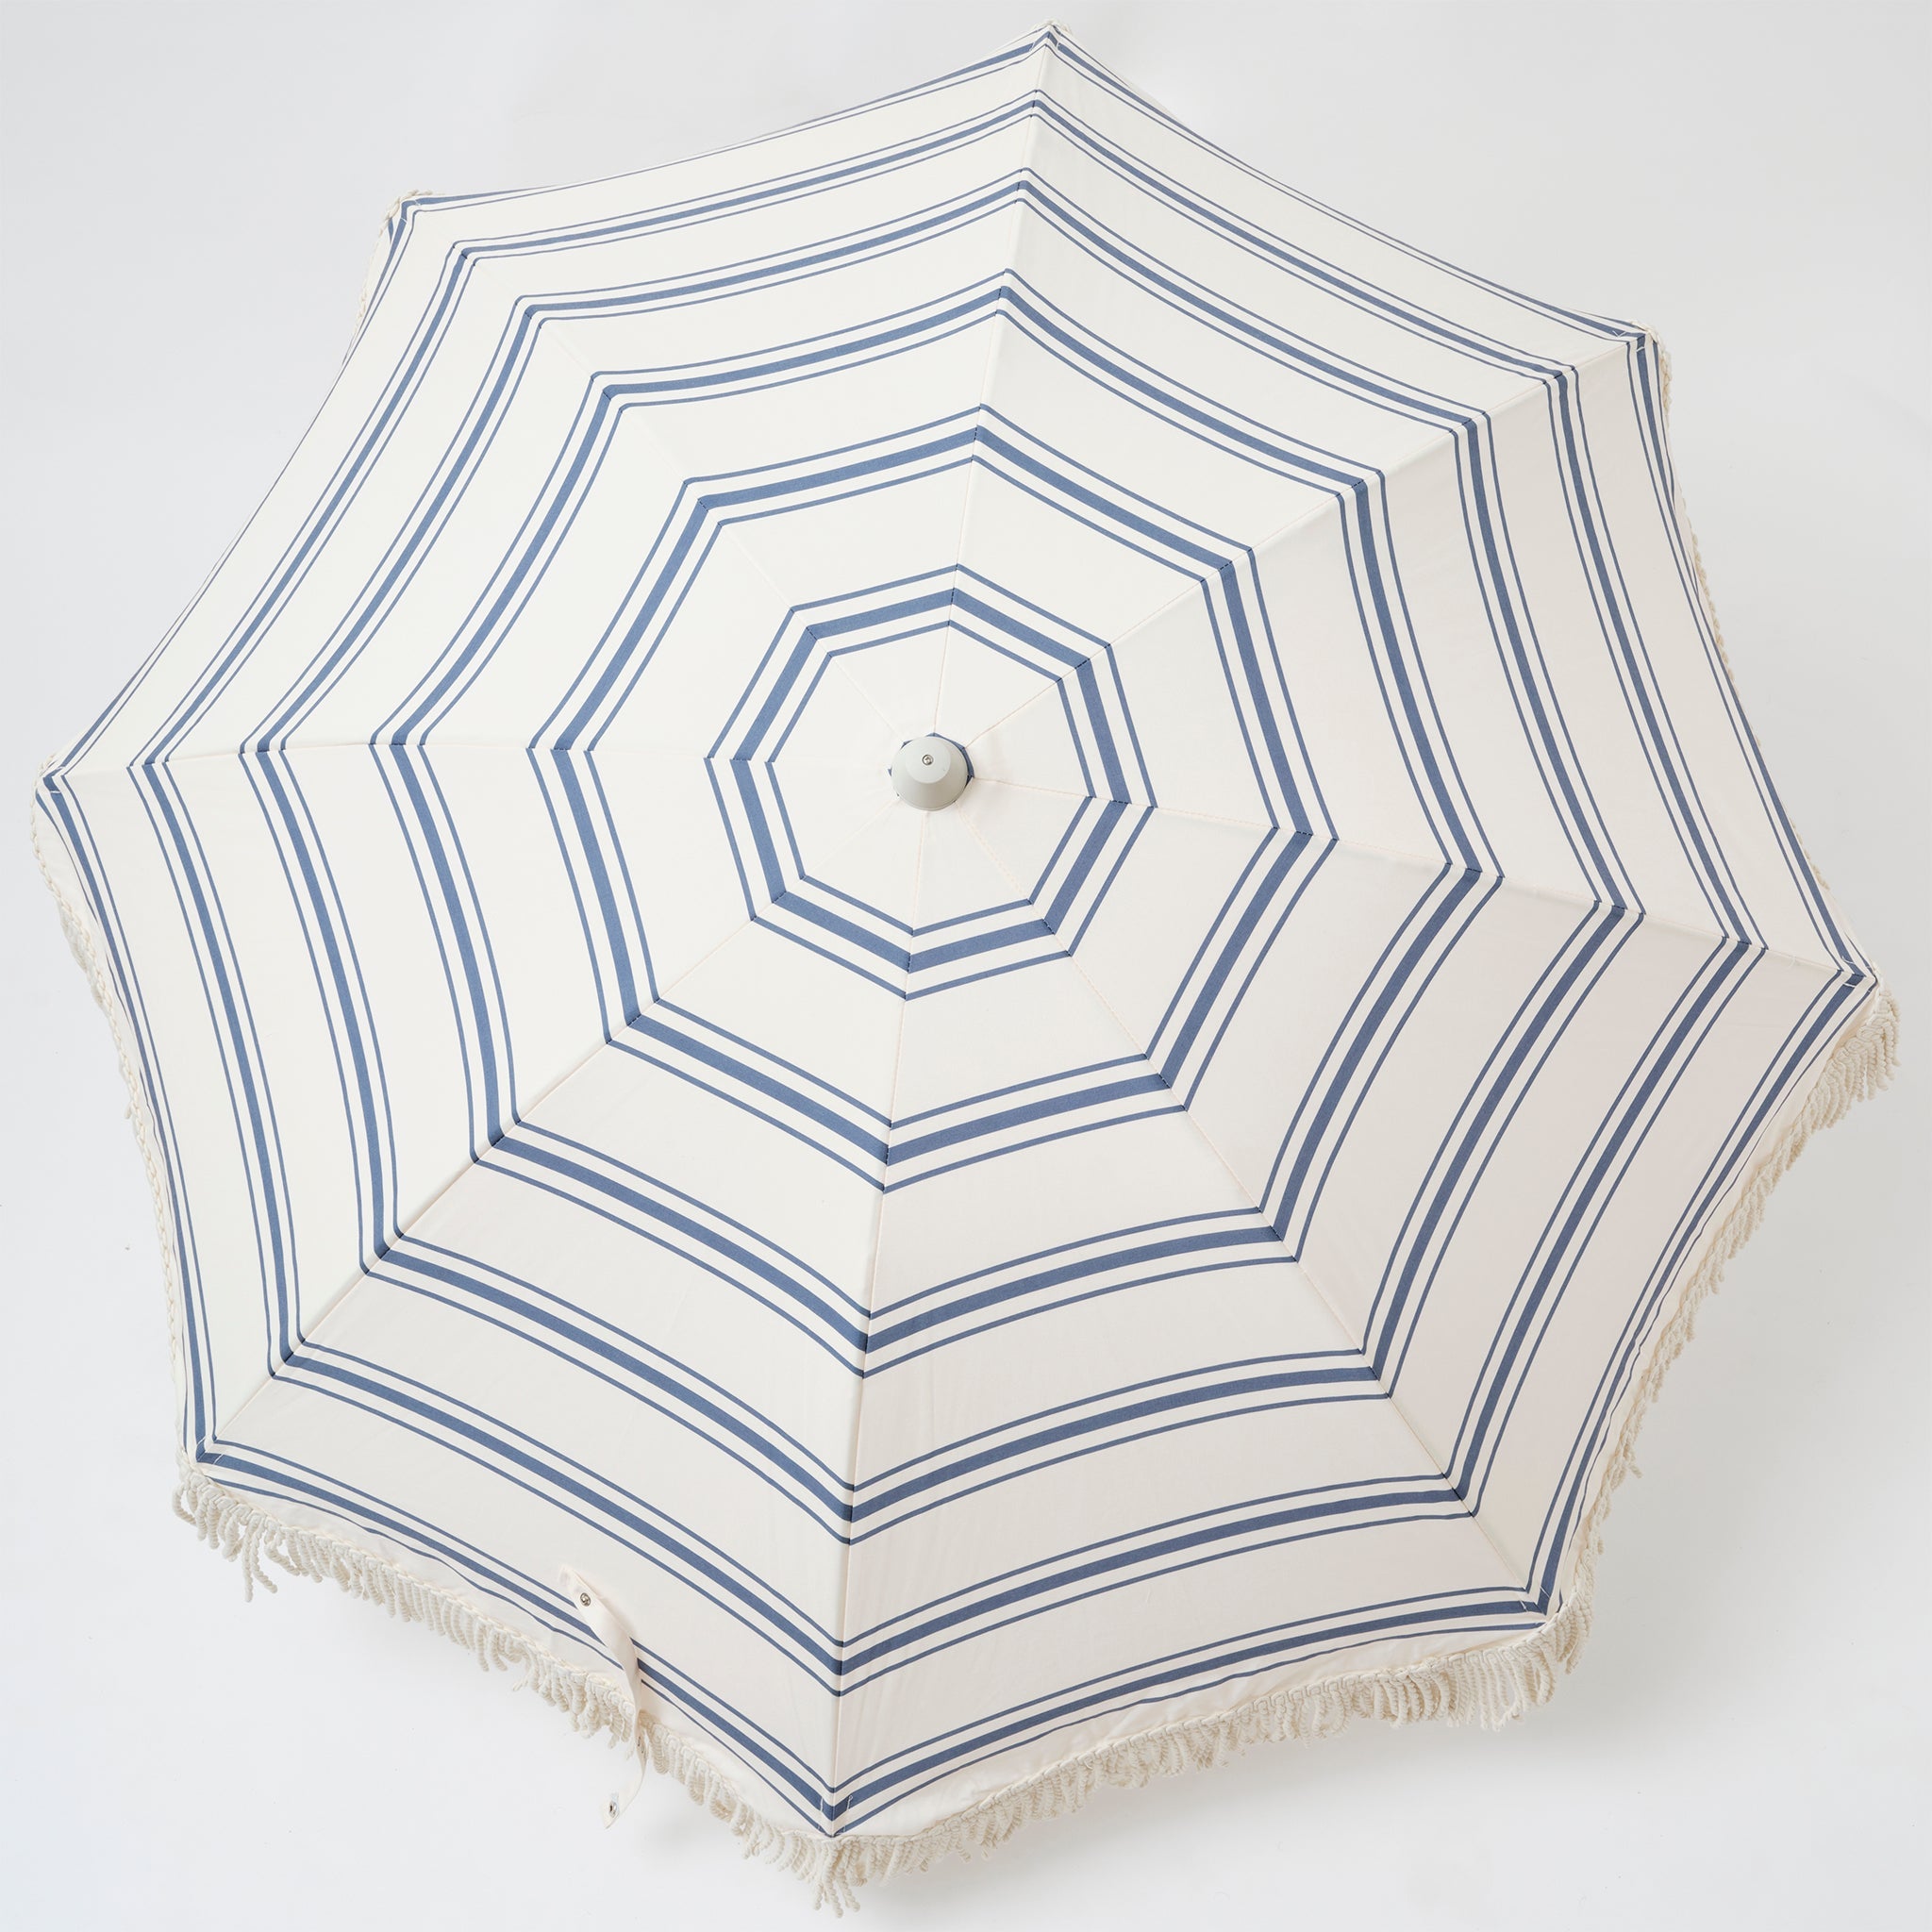 Luxe Beach Umbrella | The Resort Coastal Blue